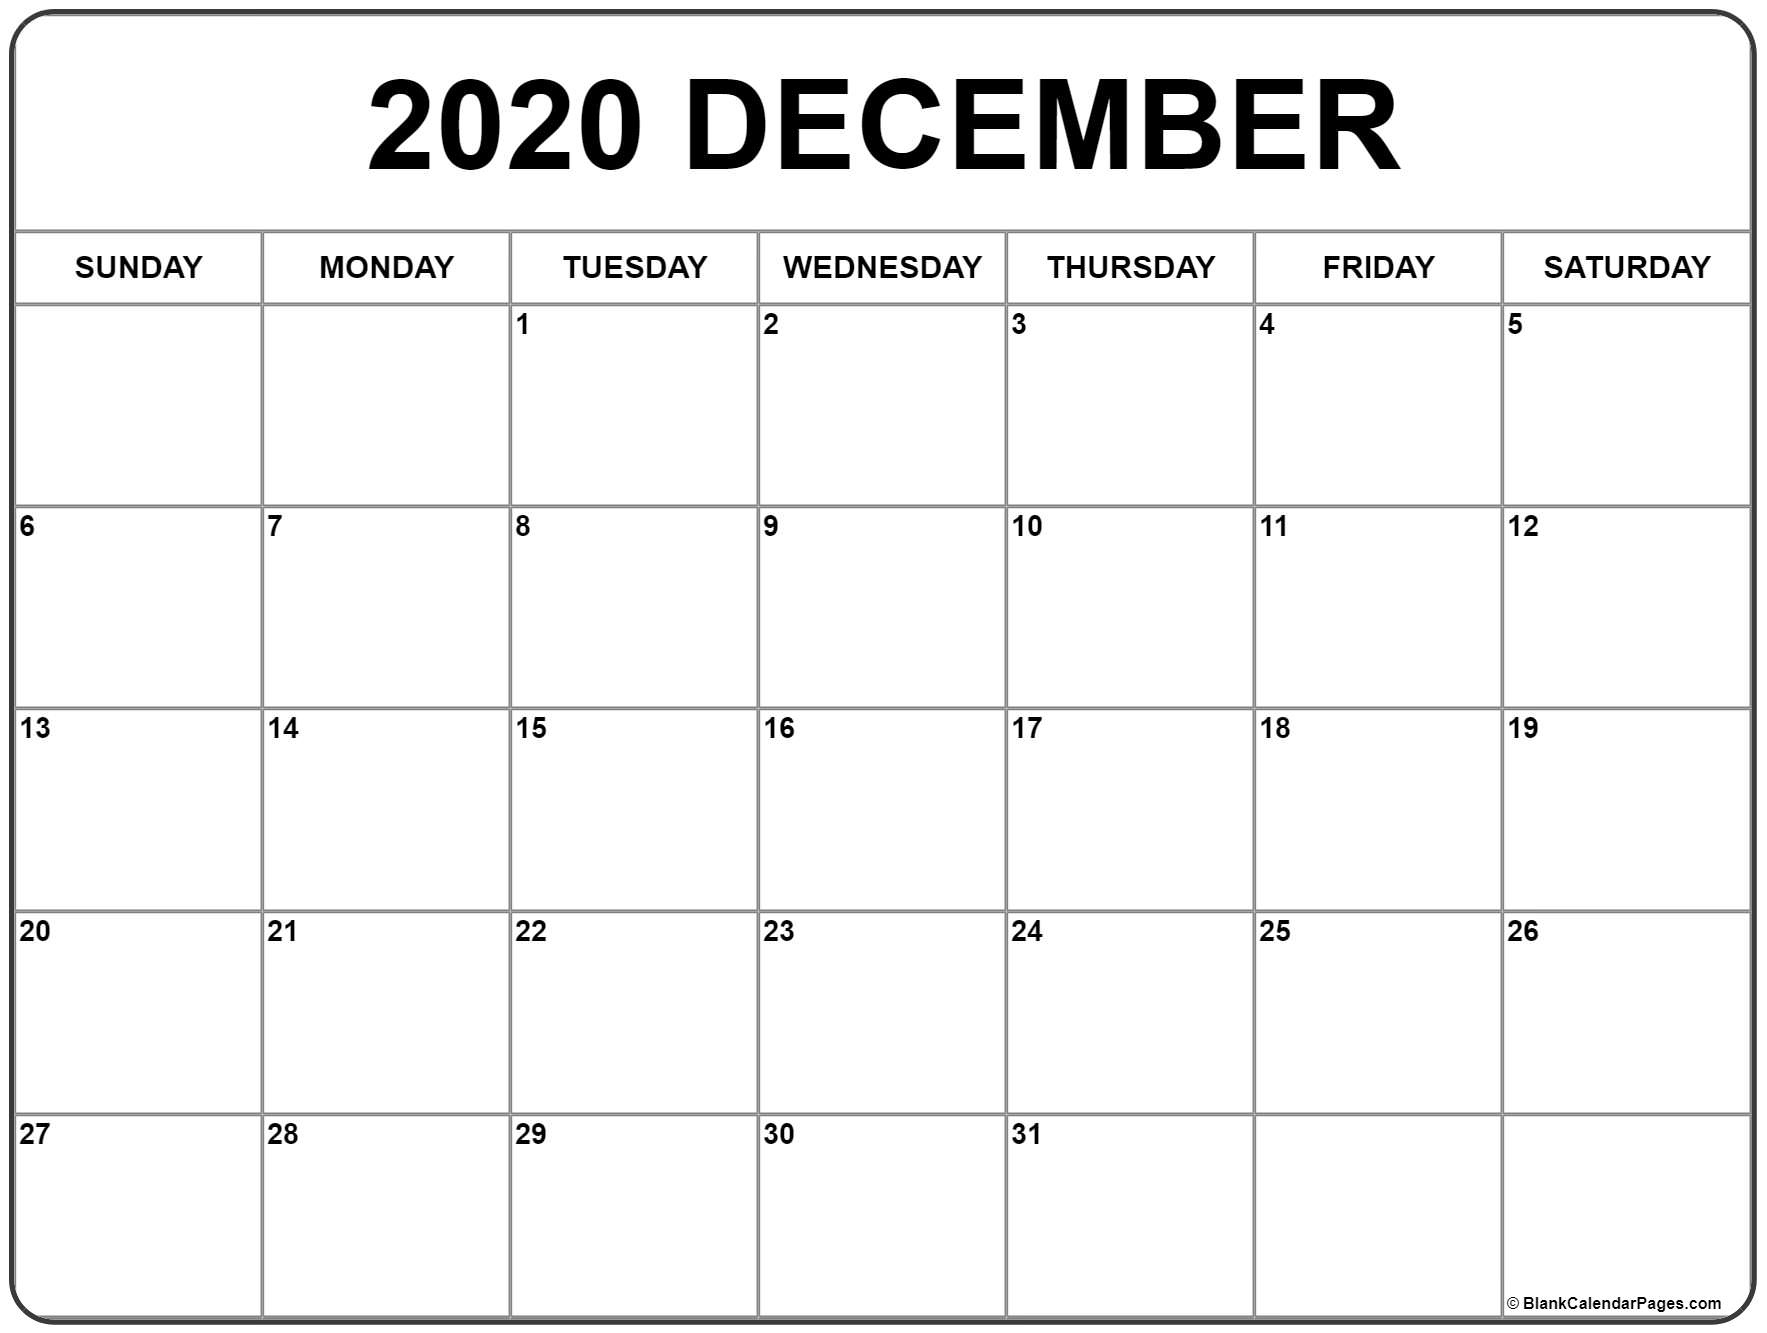 December 2020 Calendar | Free Printable Monthly Calendars Dashing 2020 Calendar For December